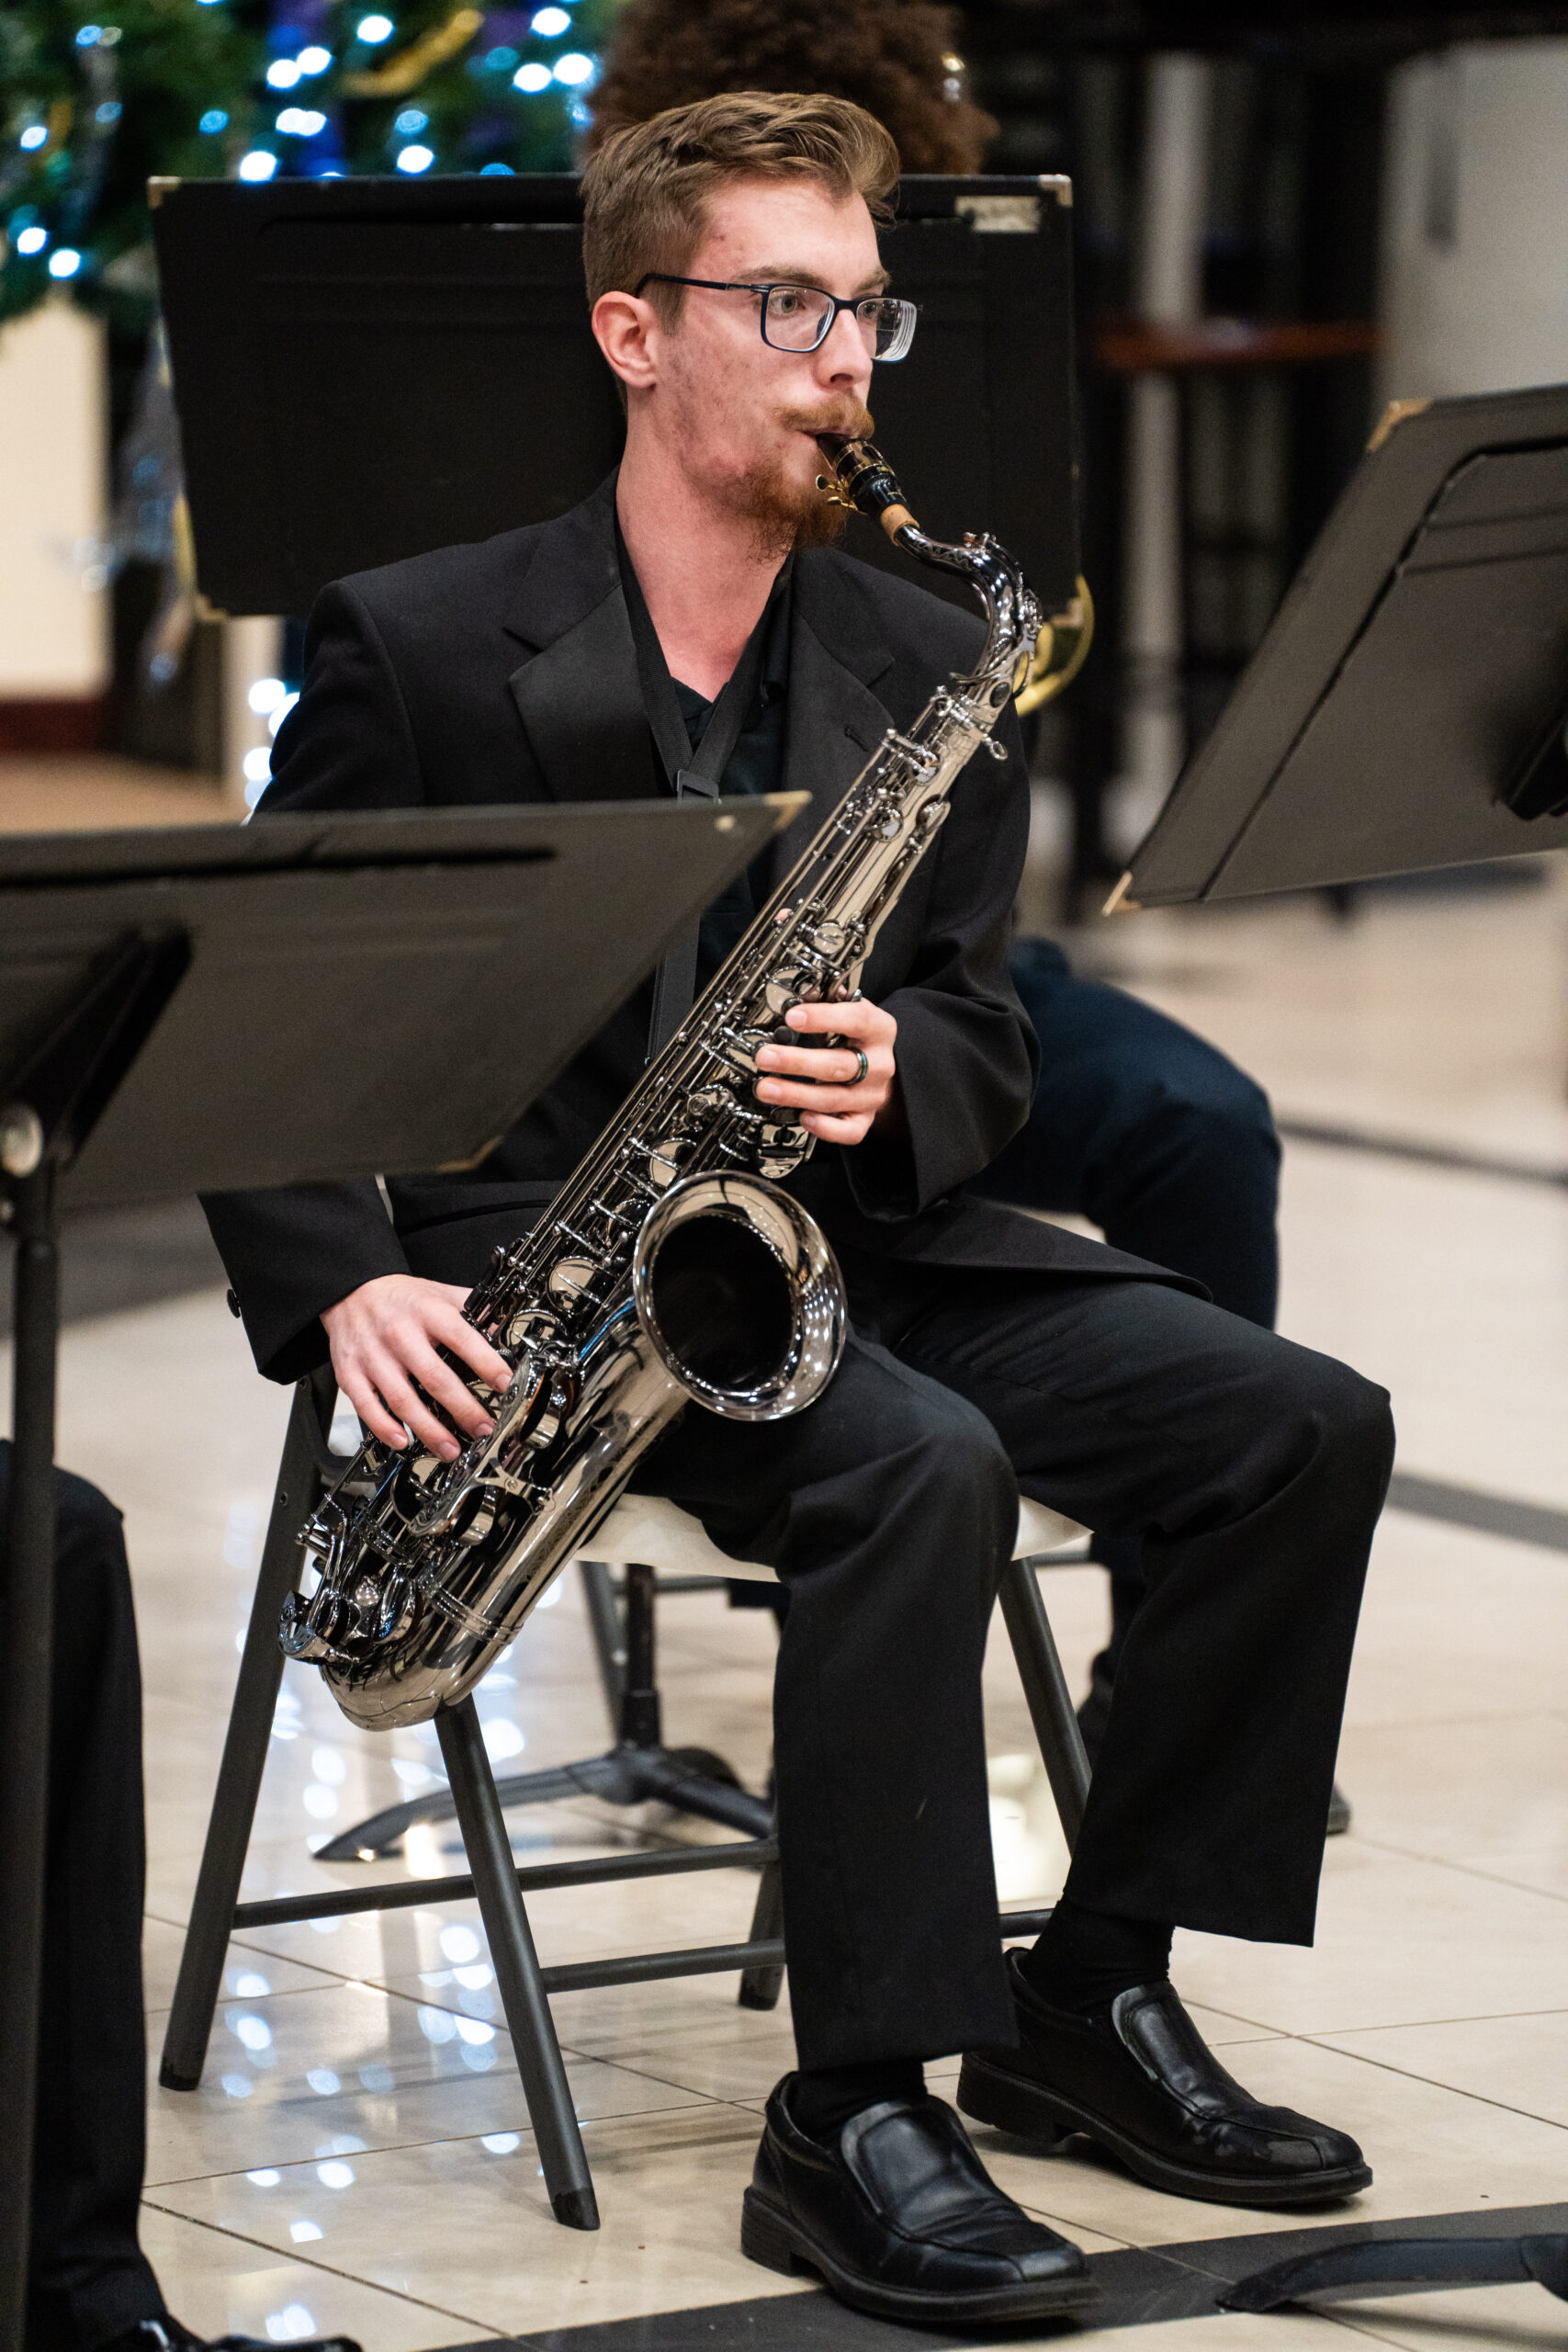 KWU saxophonist